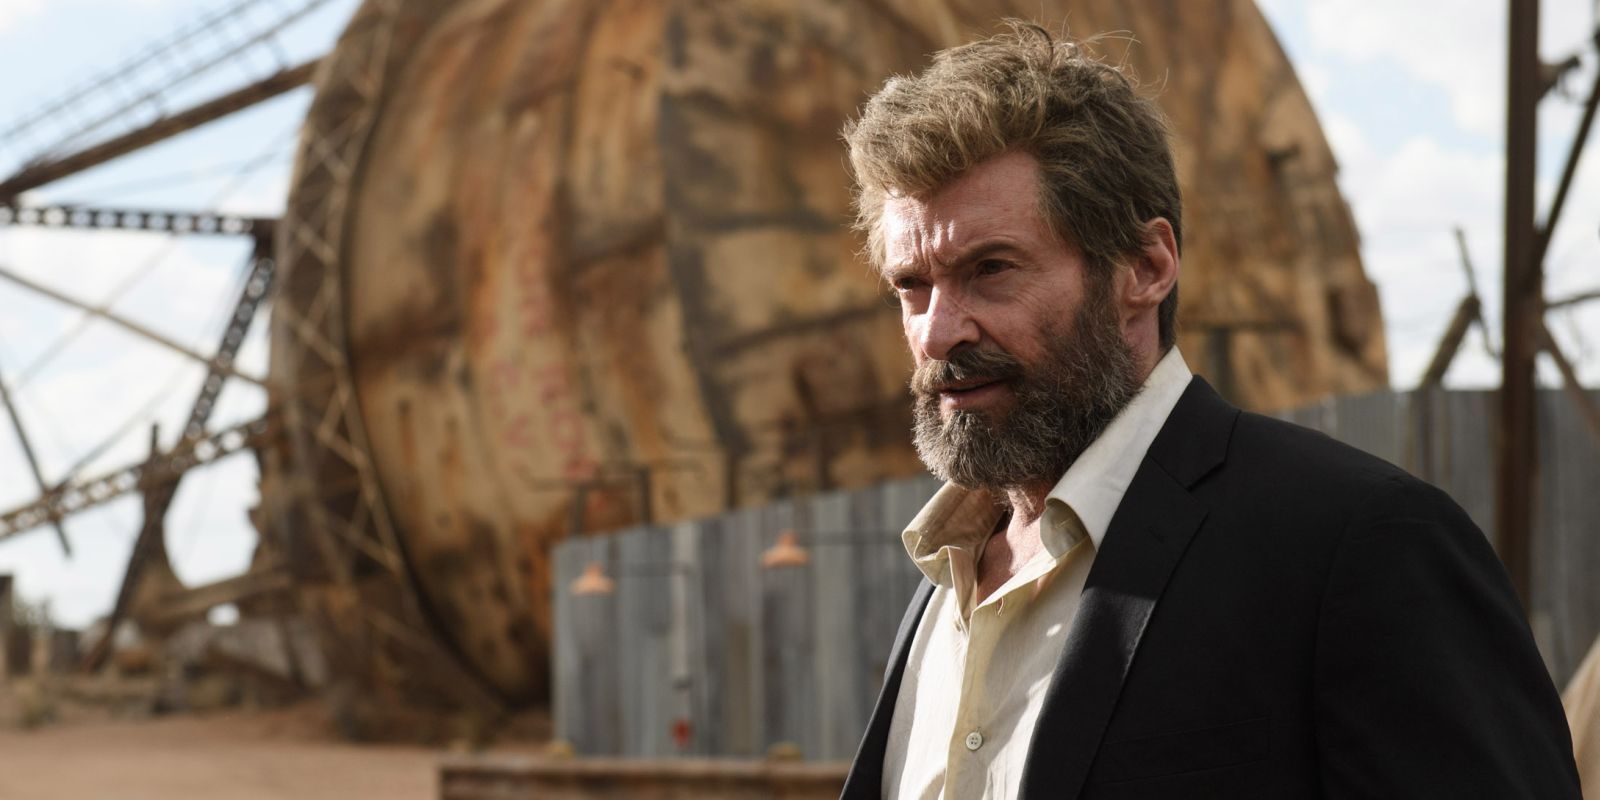 Hugh Jackman as Logan looking ahead in 2017 X-Men film Logan